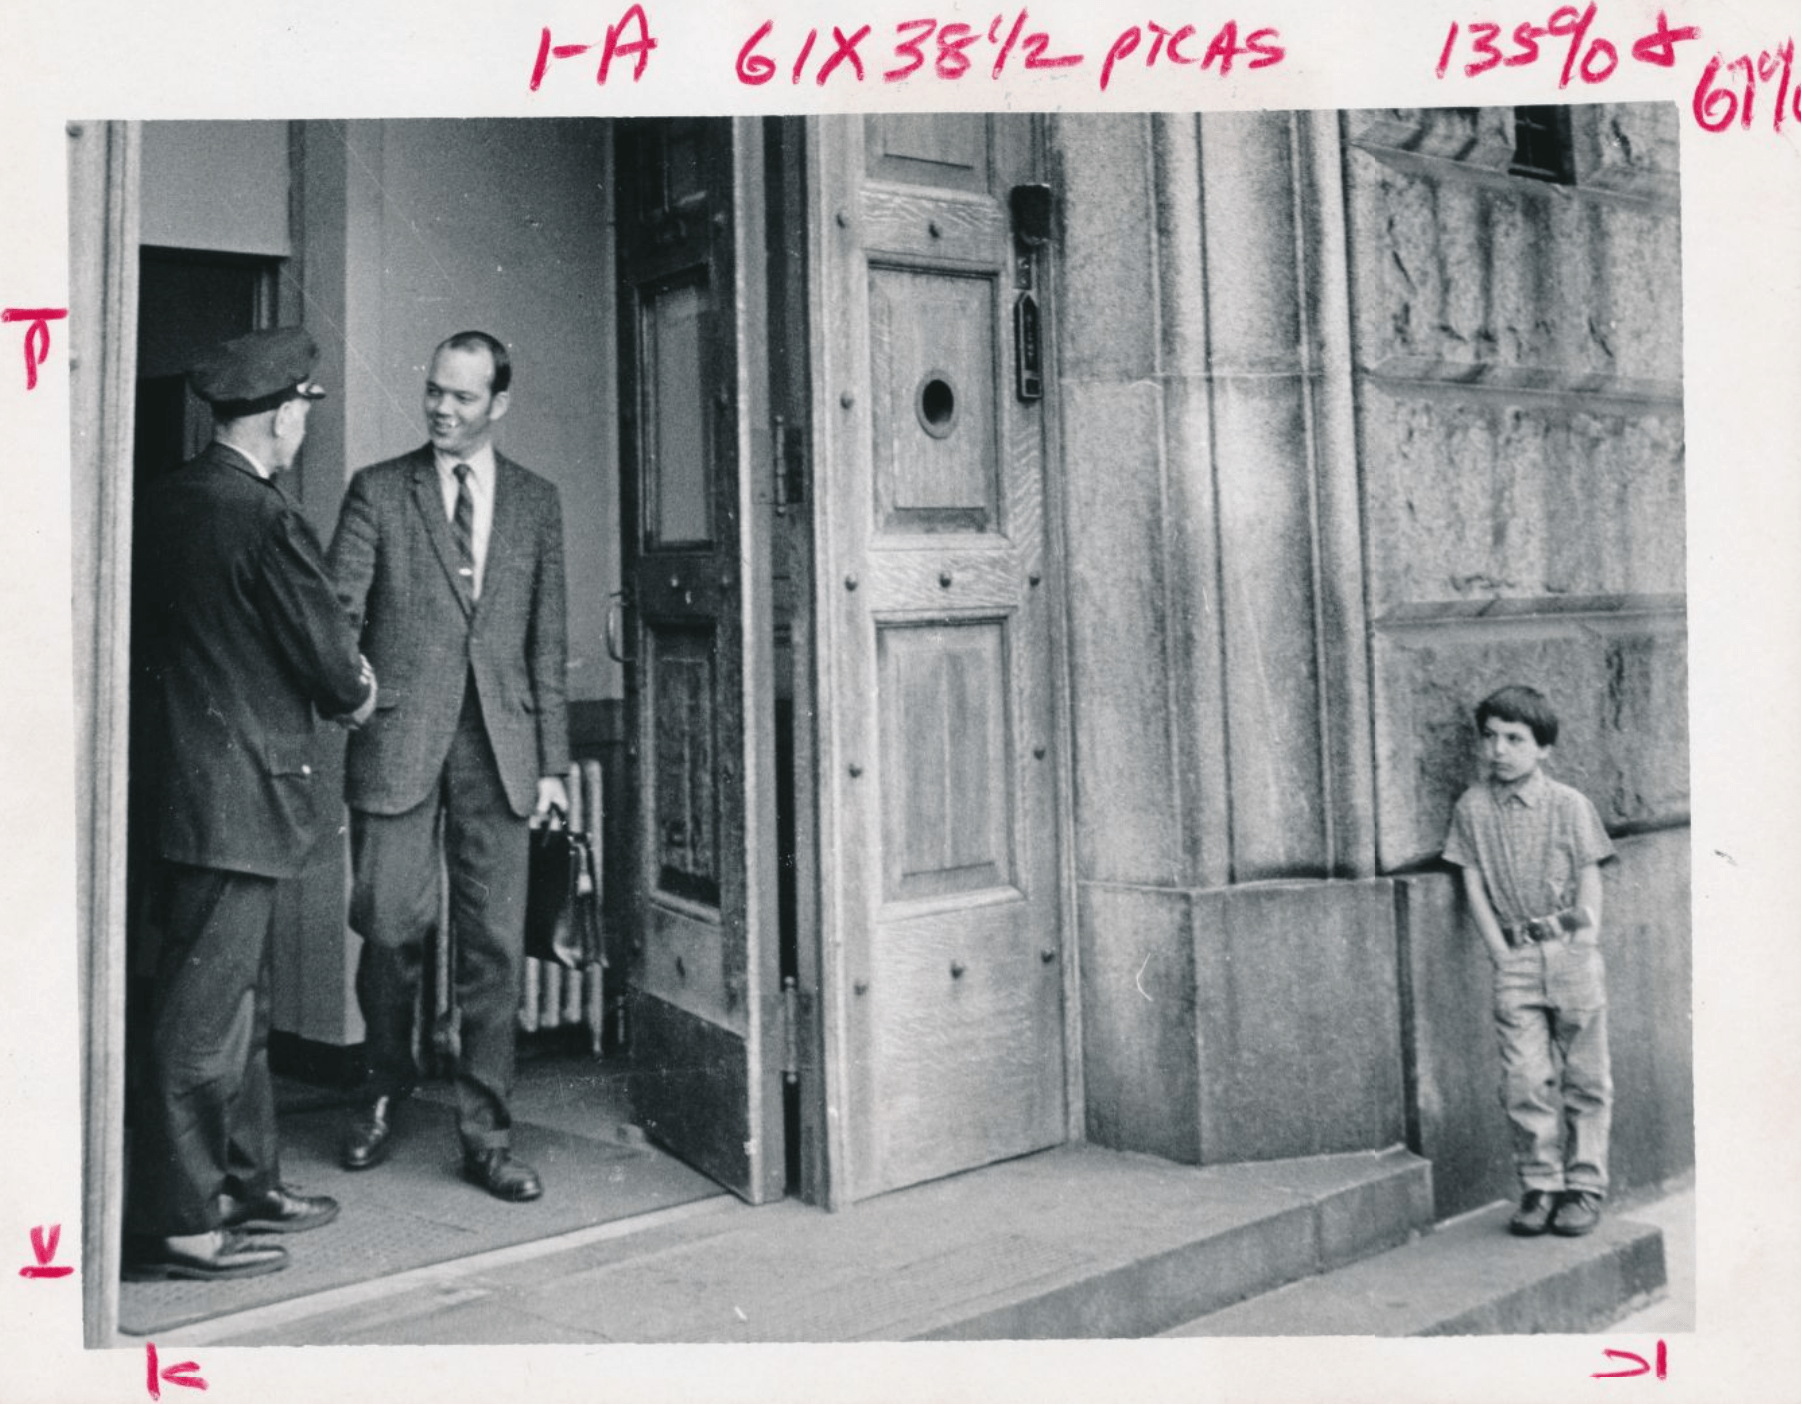 BTU President John Reilly leaves the Charles Street jail as a child looks on.